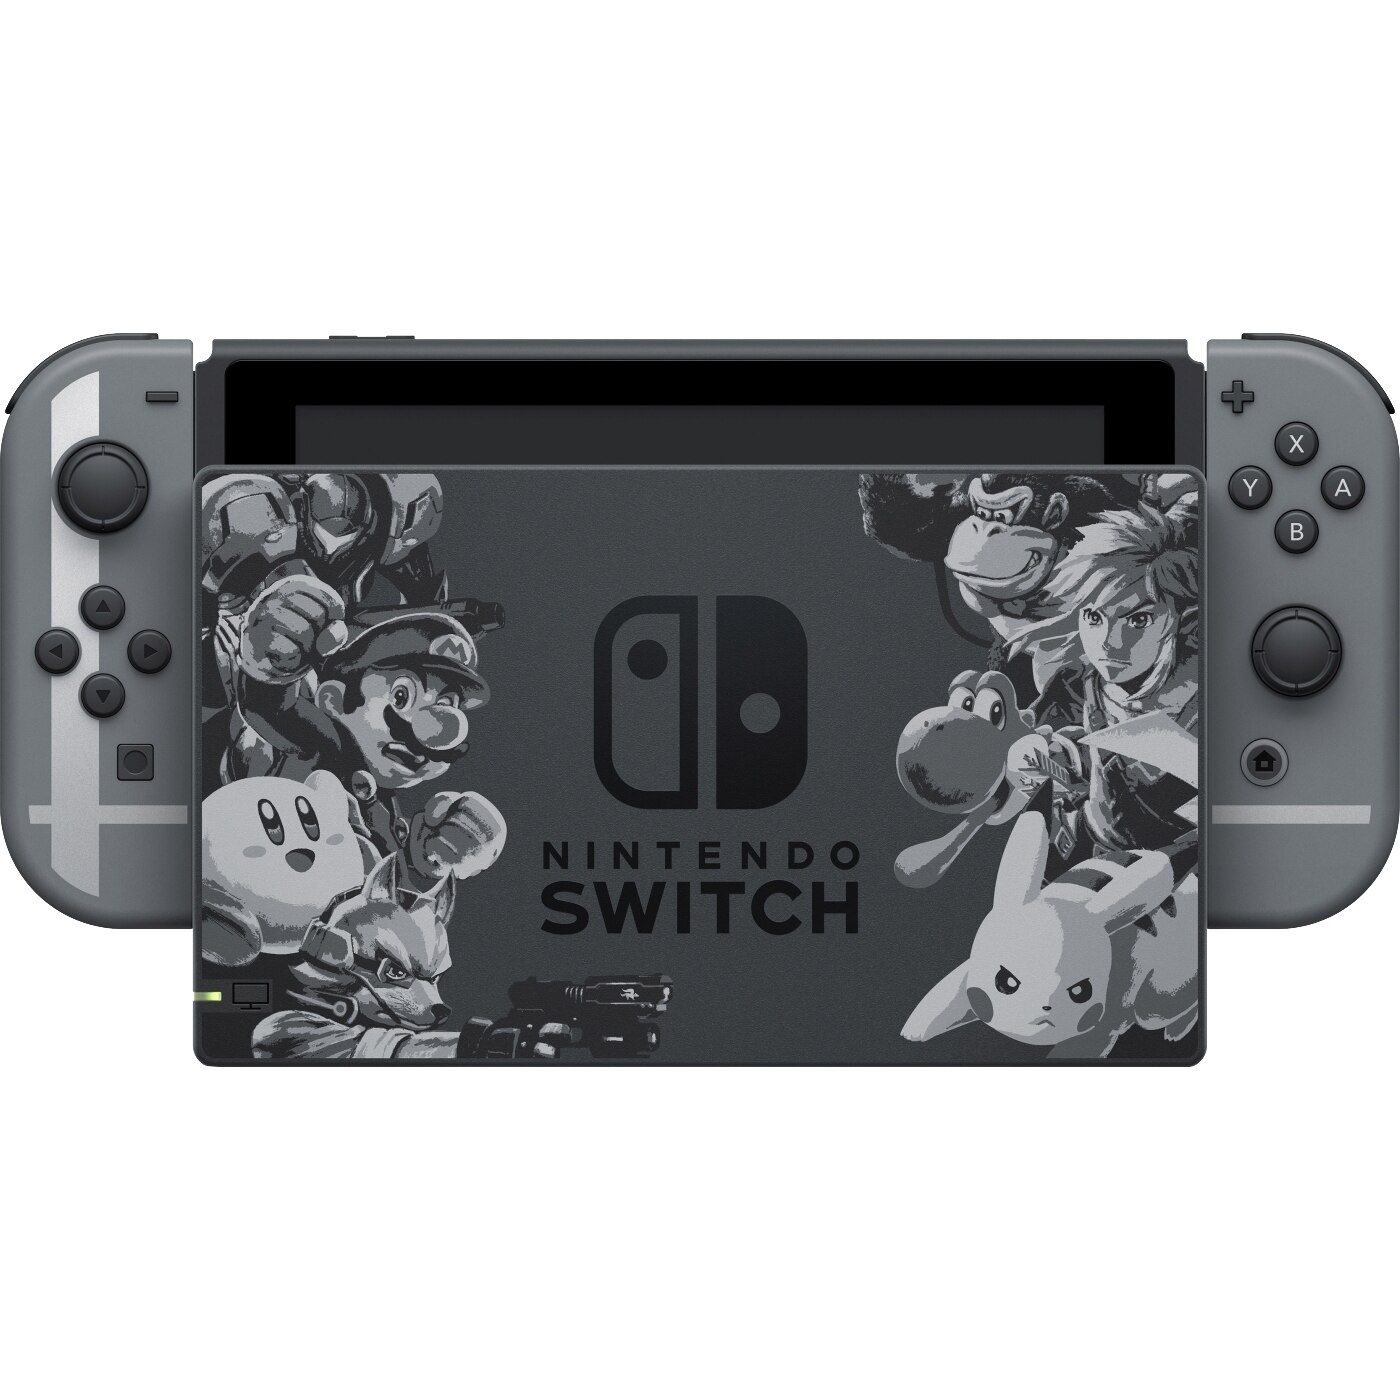 Smash bros nintendo switch. Игровая консоль Nintendo Switch. Нинтендо свитч супер смэш БРОС. Nintendo Switch super Smash Bros Ultimate Edition. Nintendo Switch Limited Edition.